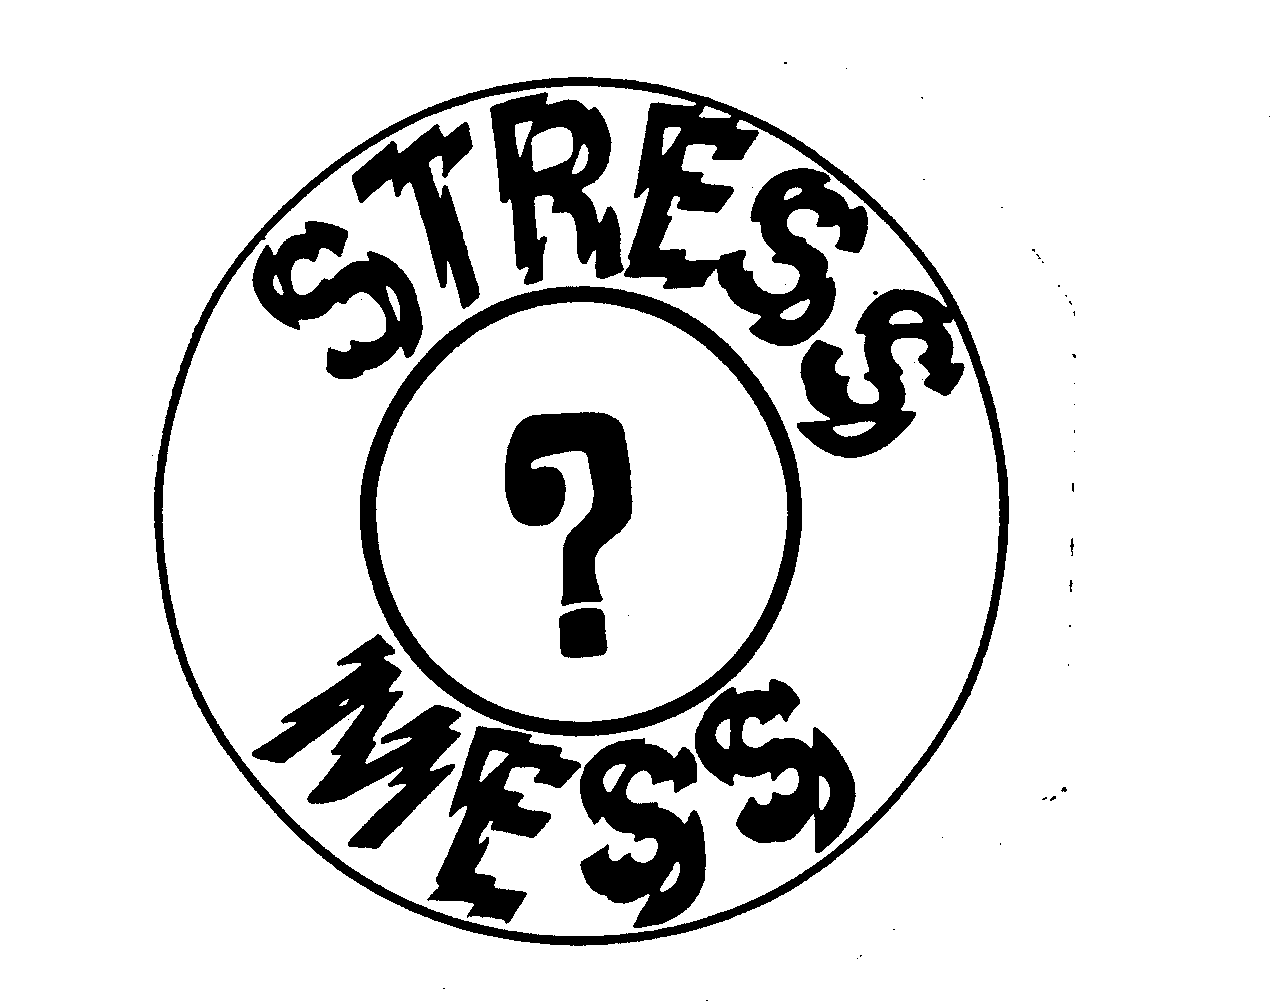  STRESS MESS ?